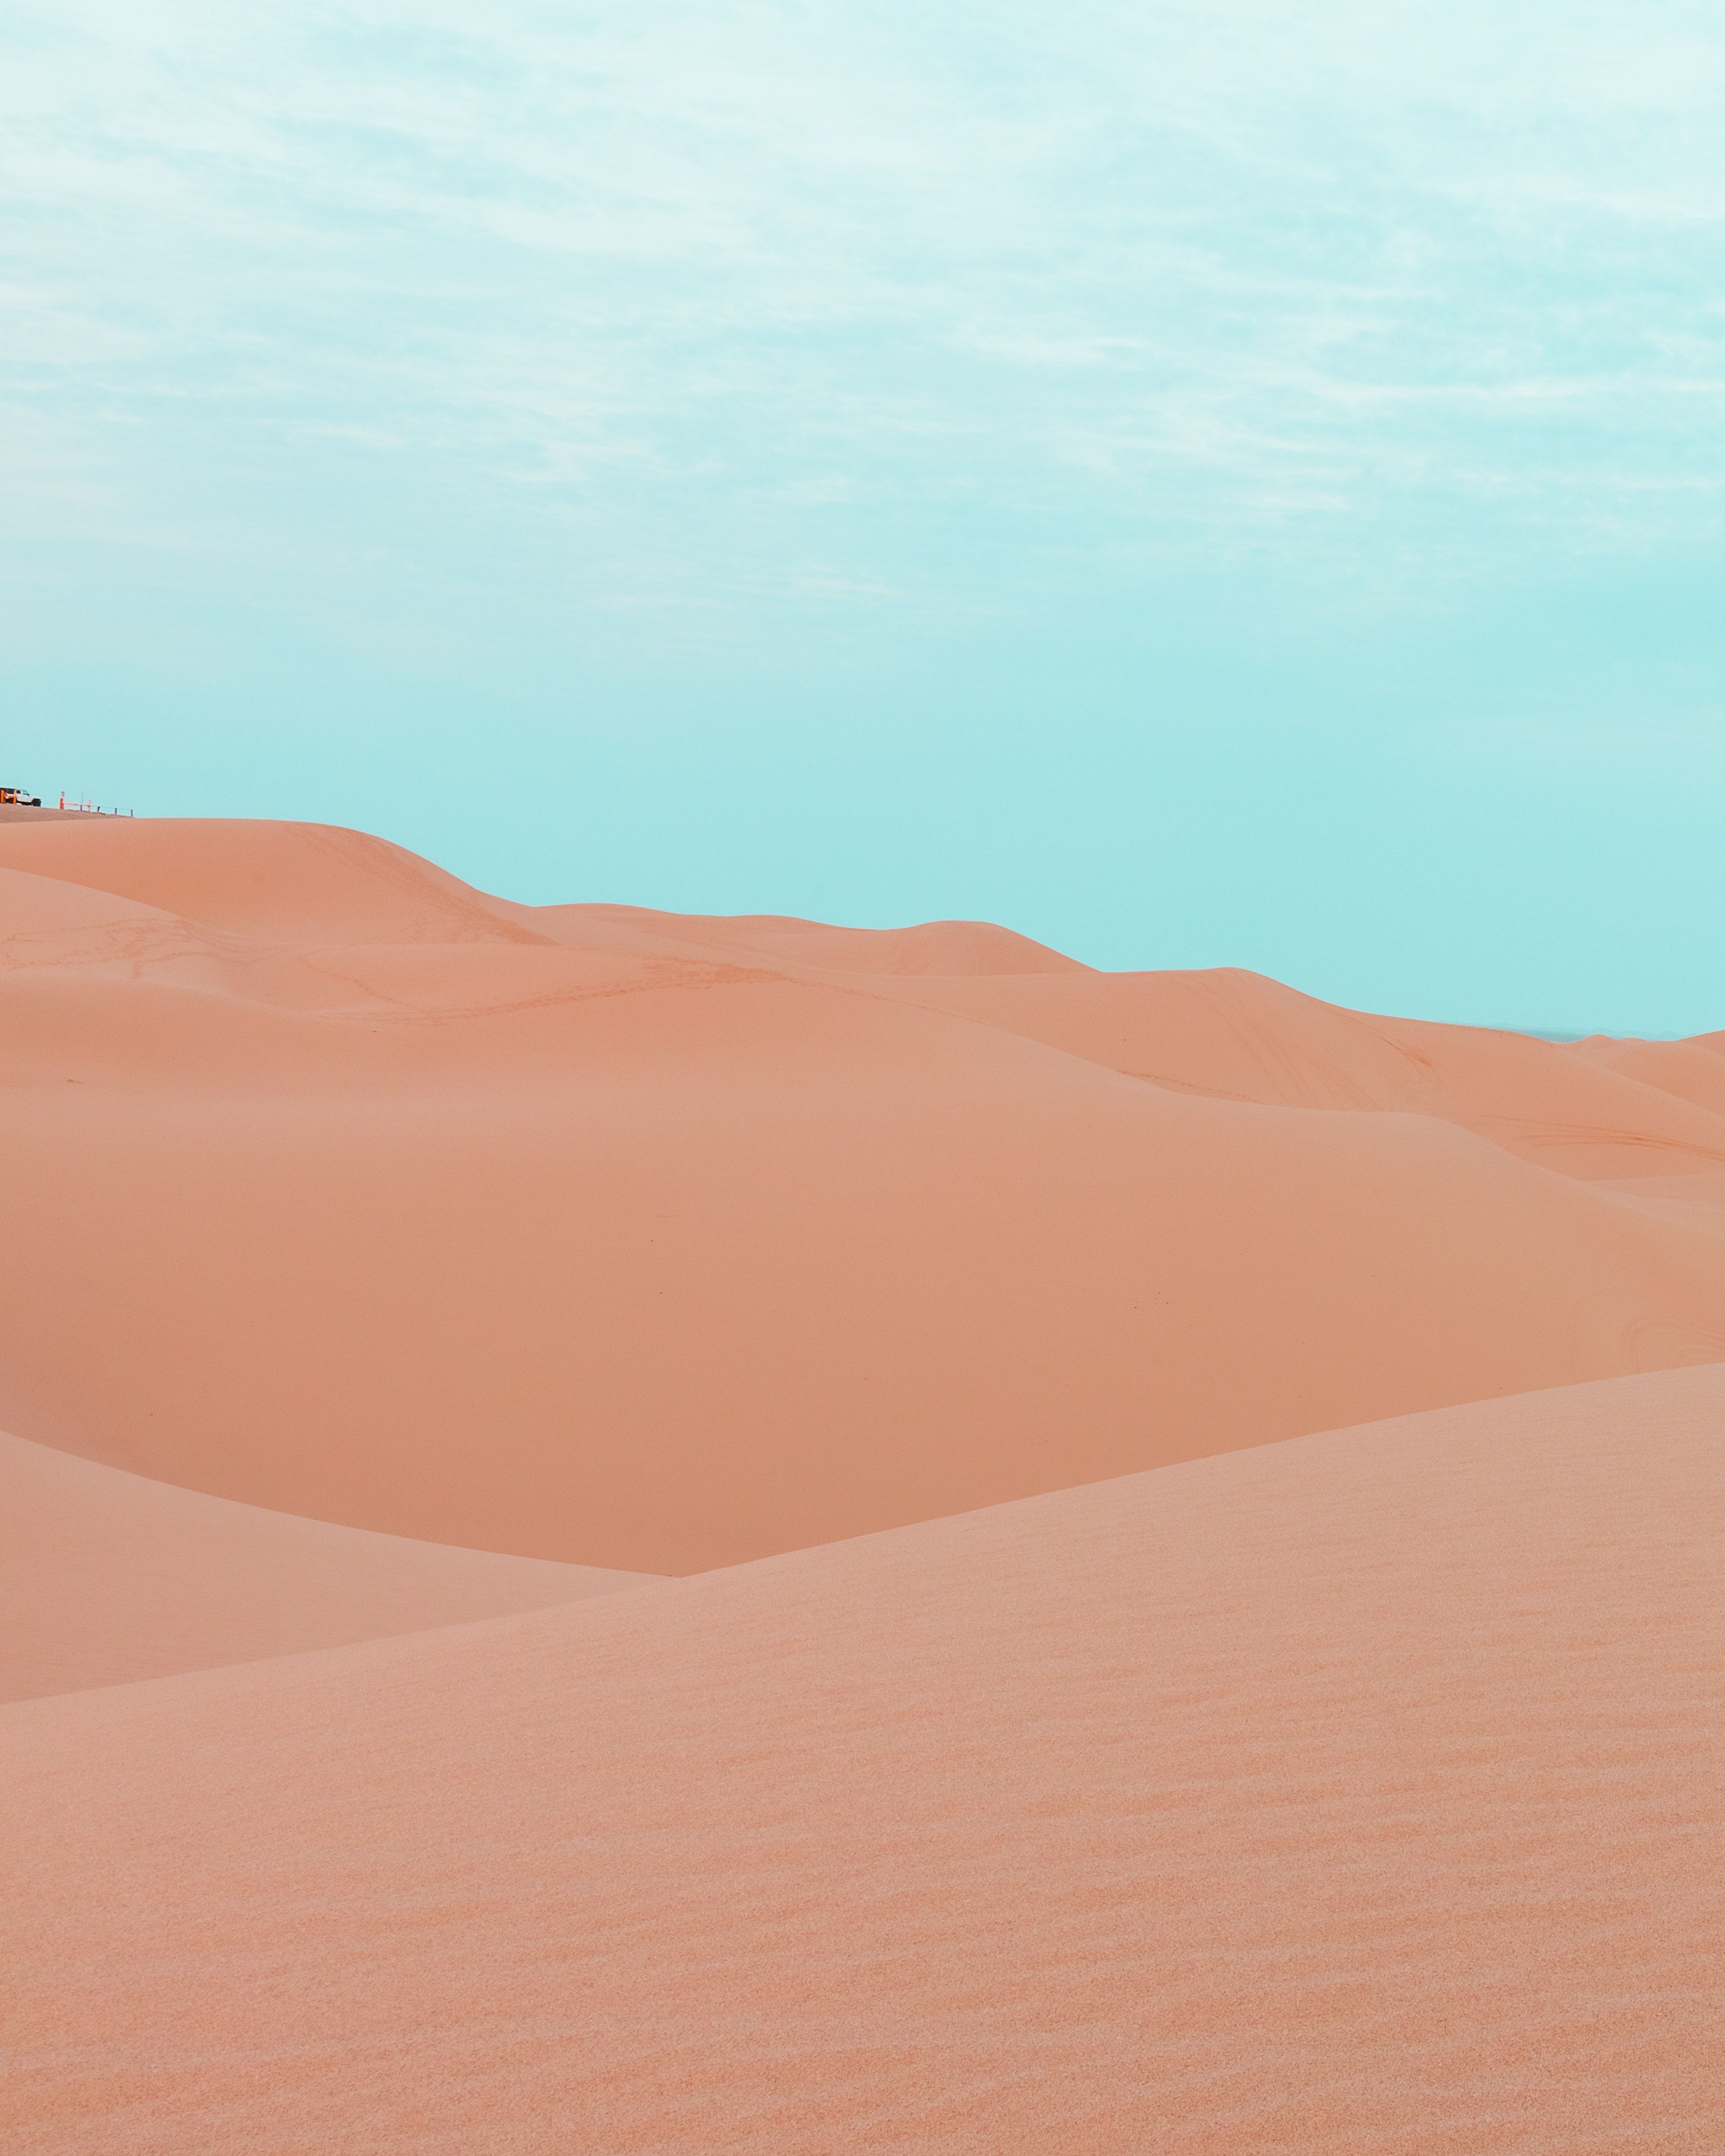 A man is riding his horse through the desert - Desert